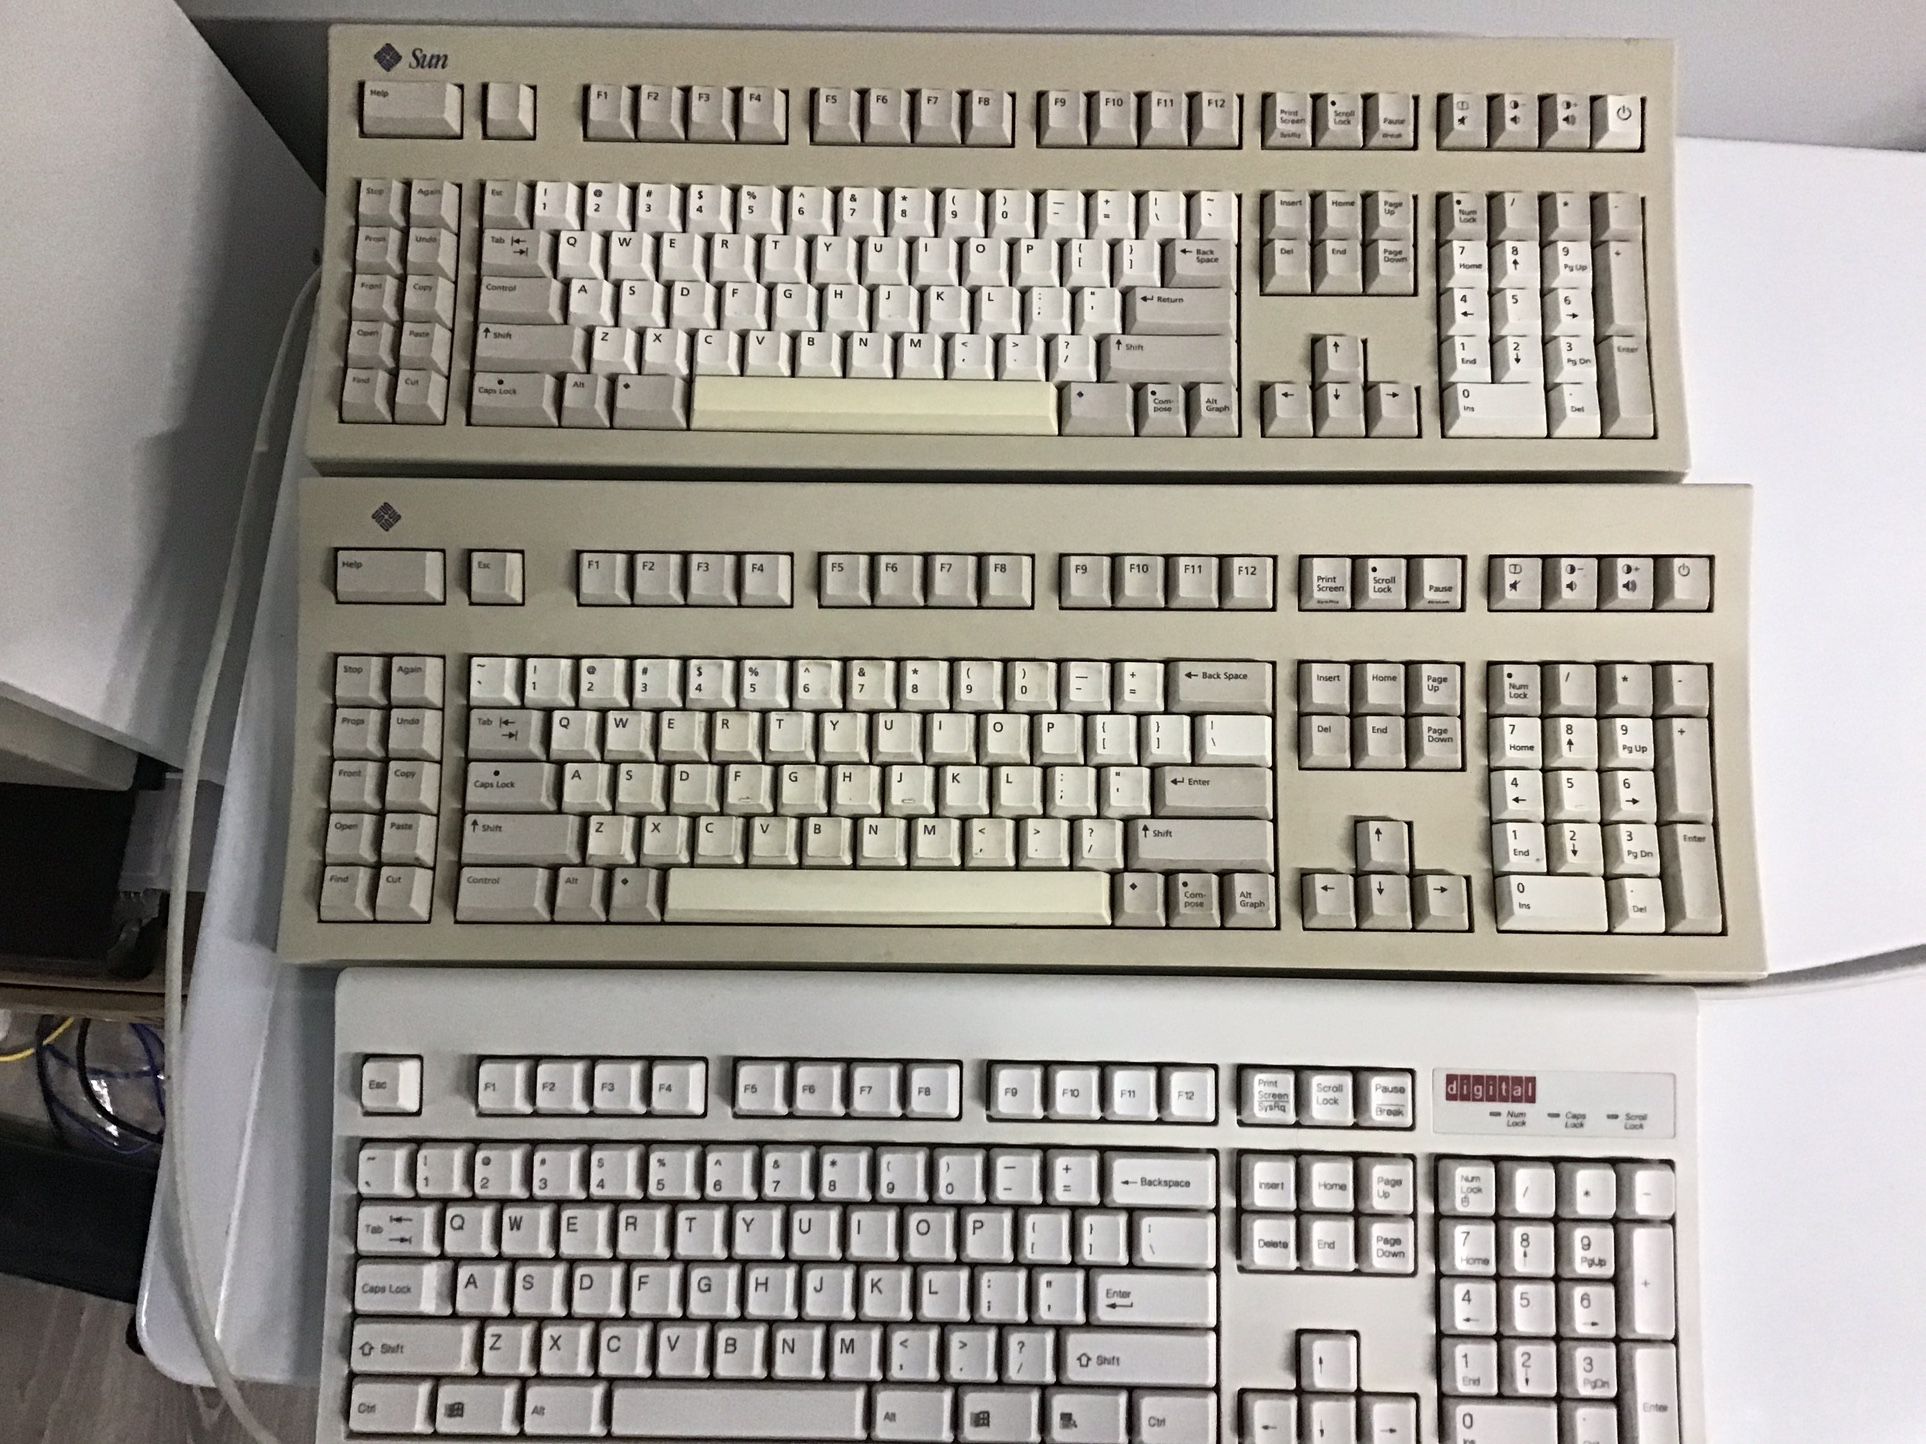 Retro Vintage Computer Keyboards